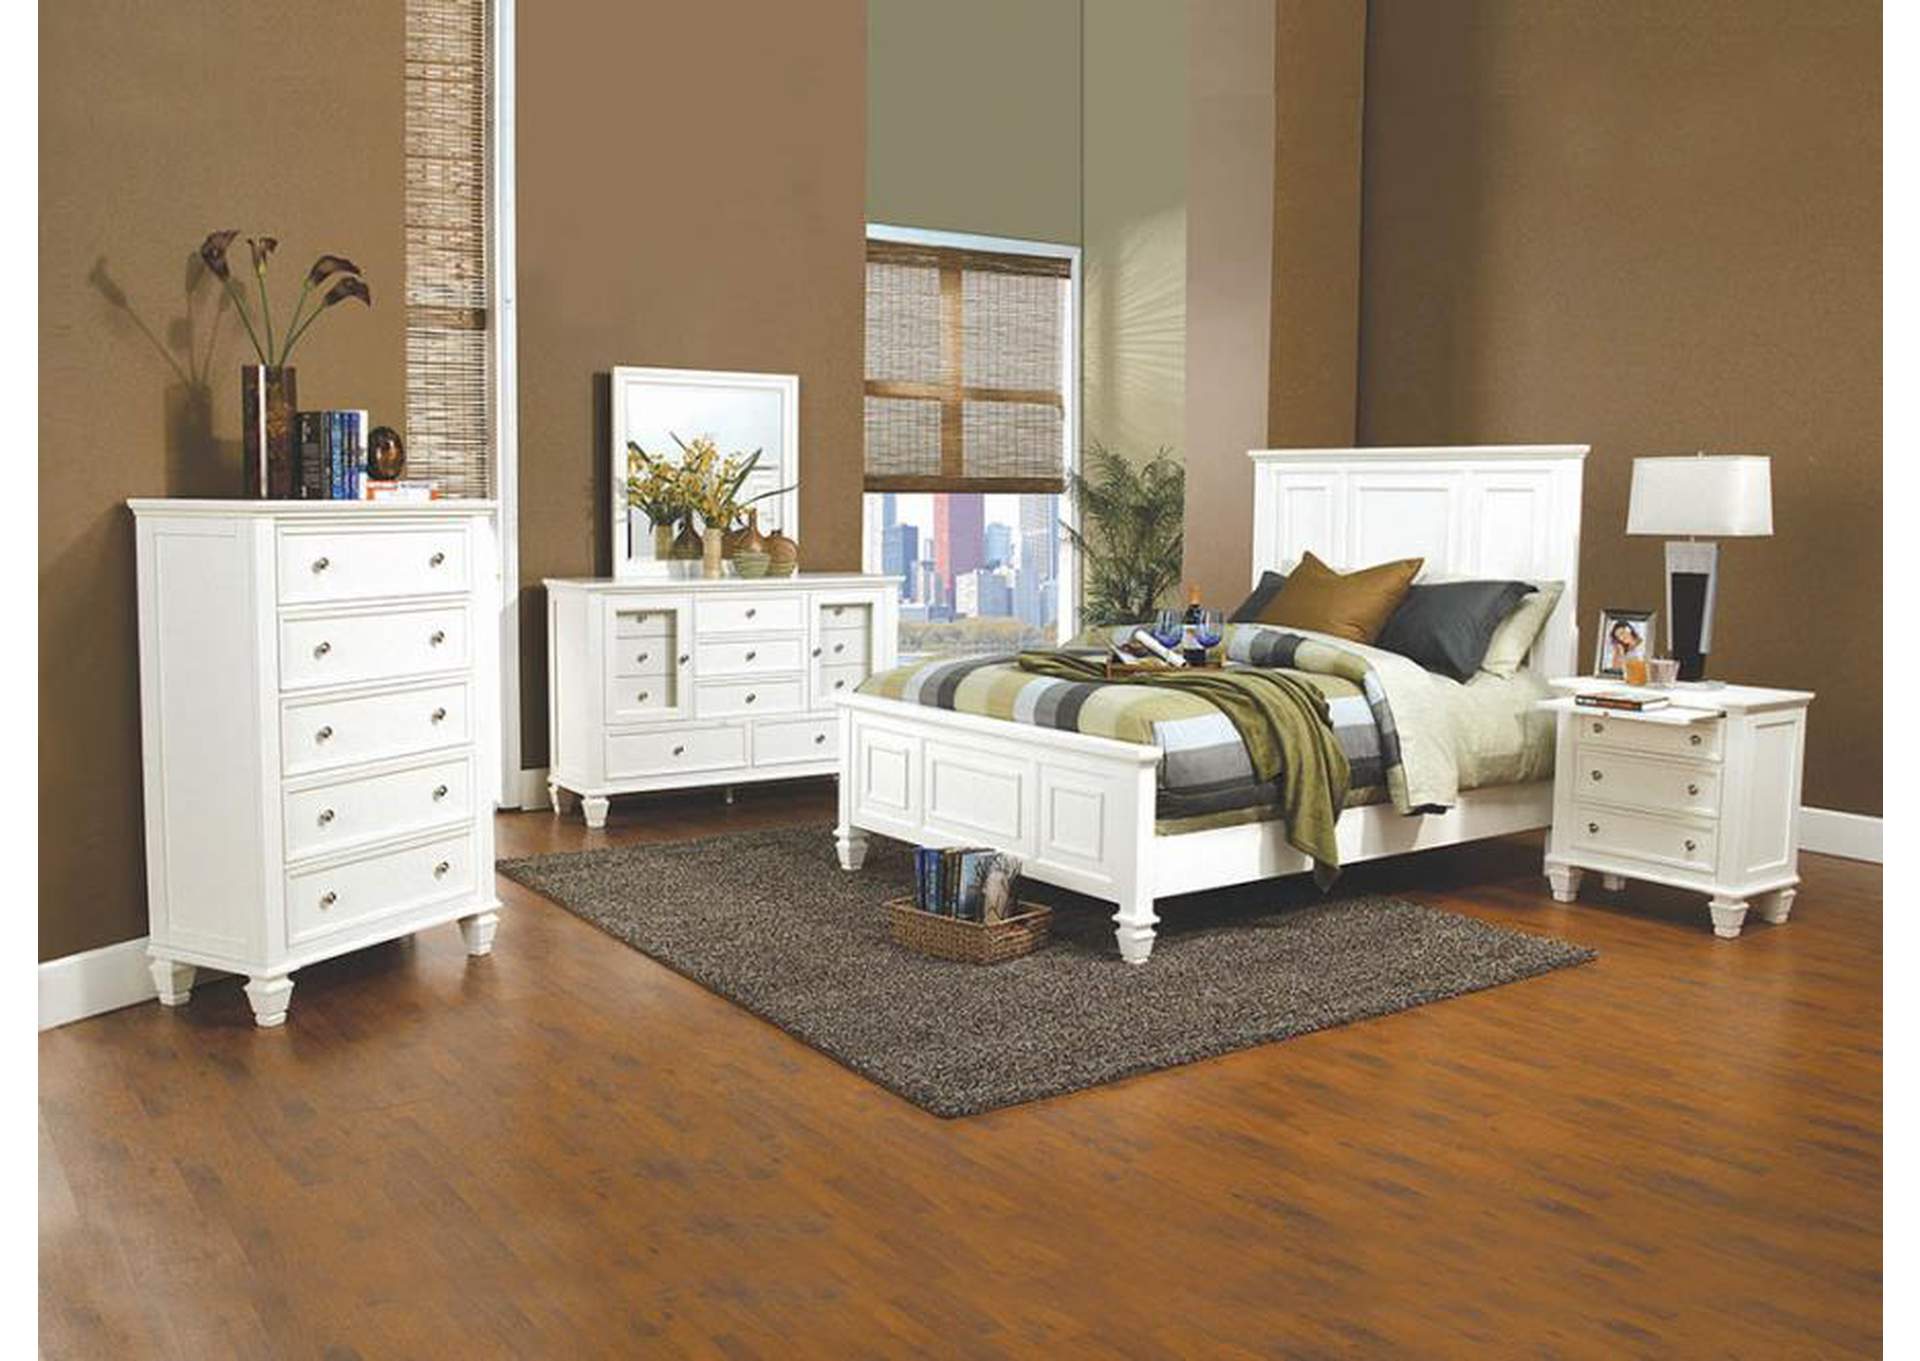 Sandy Beach Eastern King Panel Bed With High Headboard White,Coaster Furniture